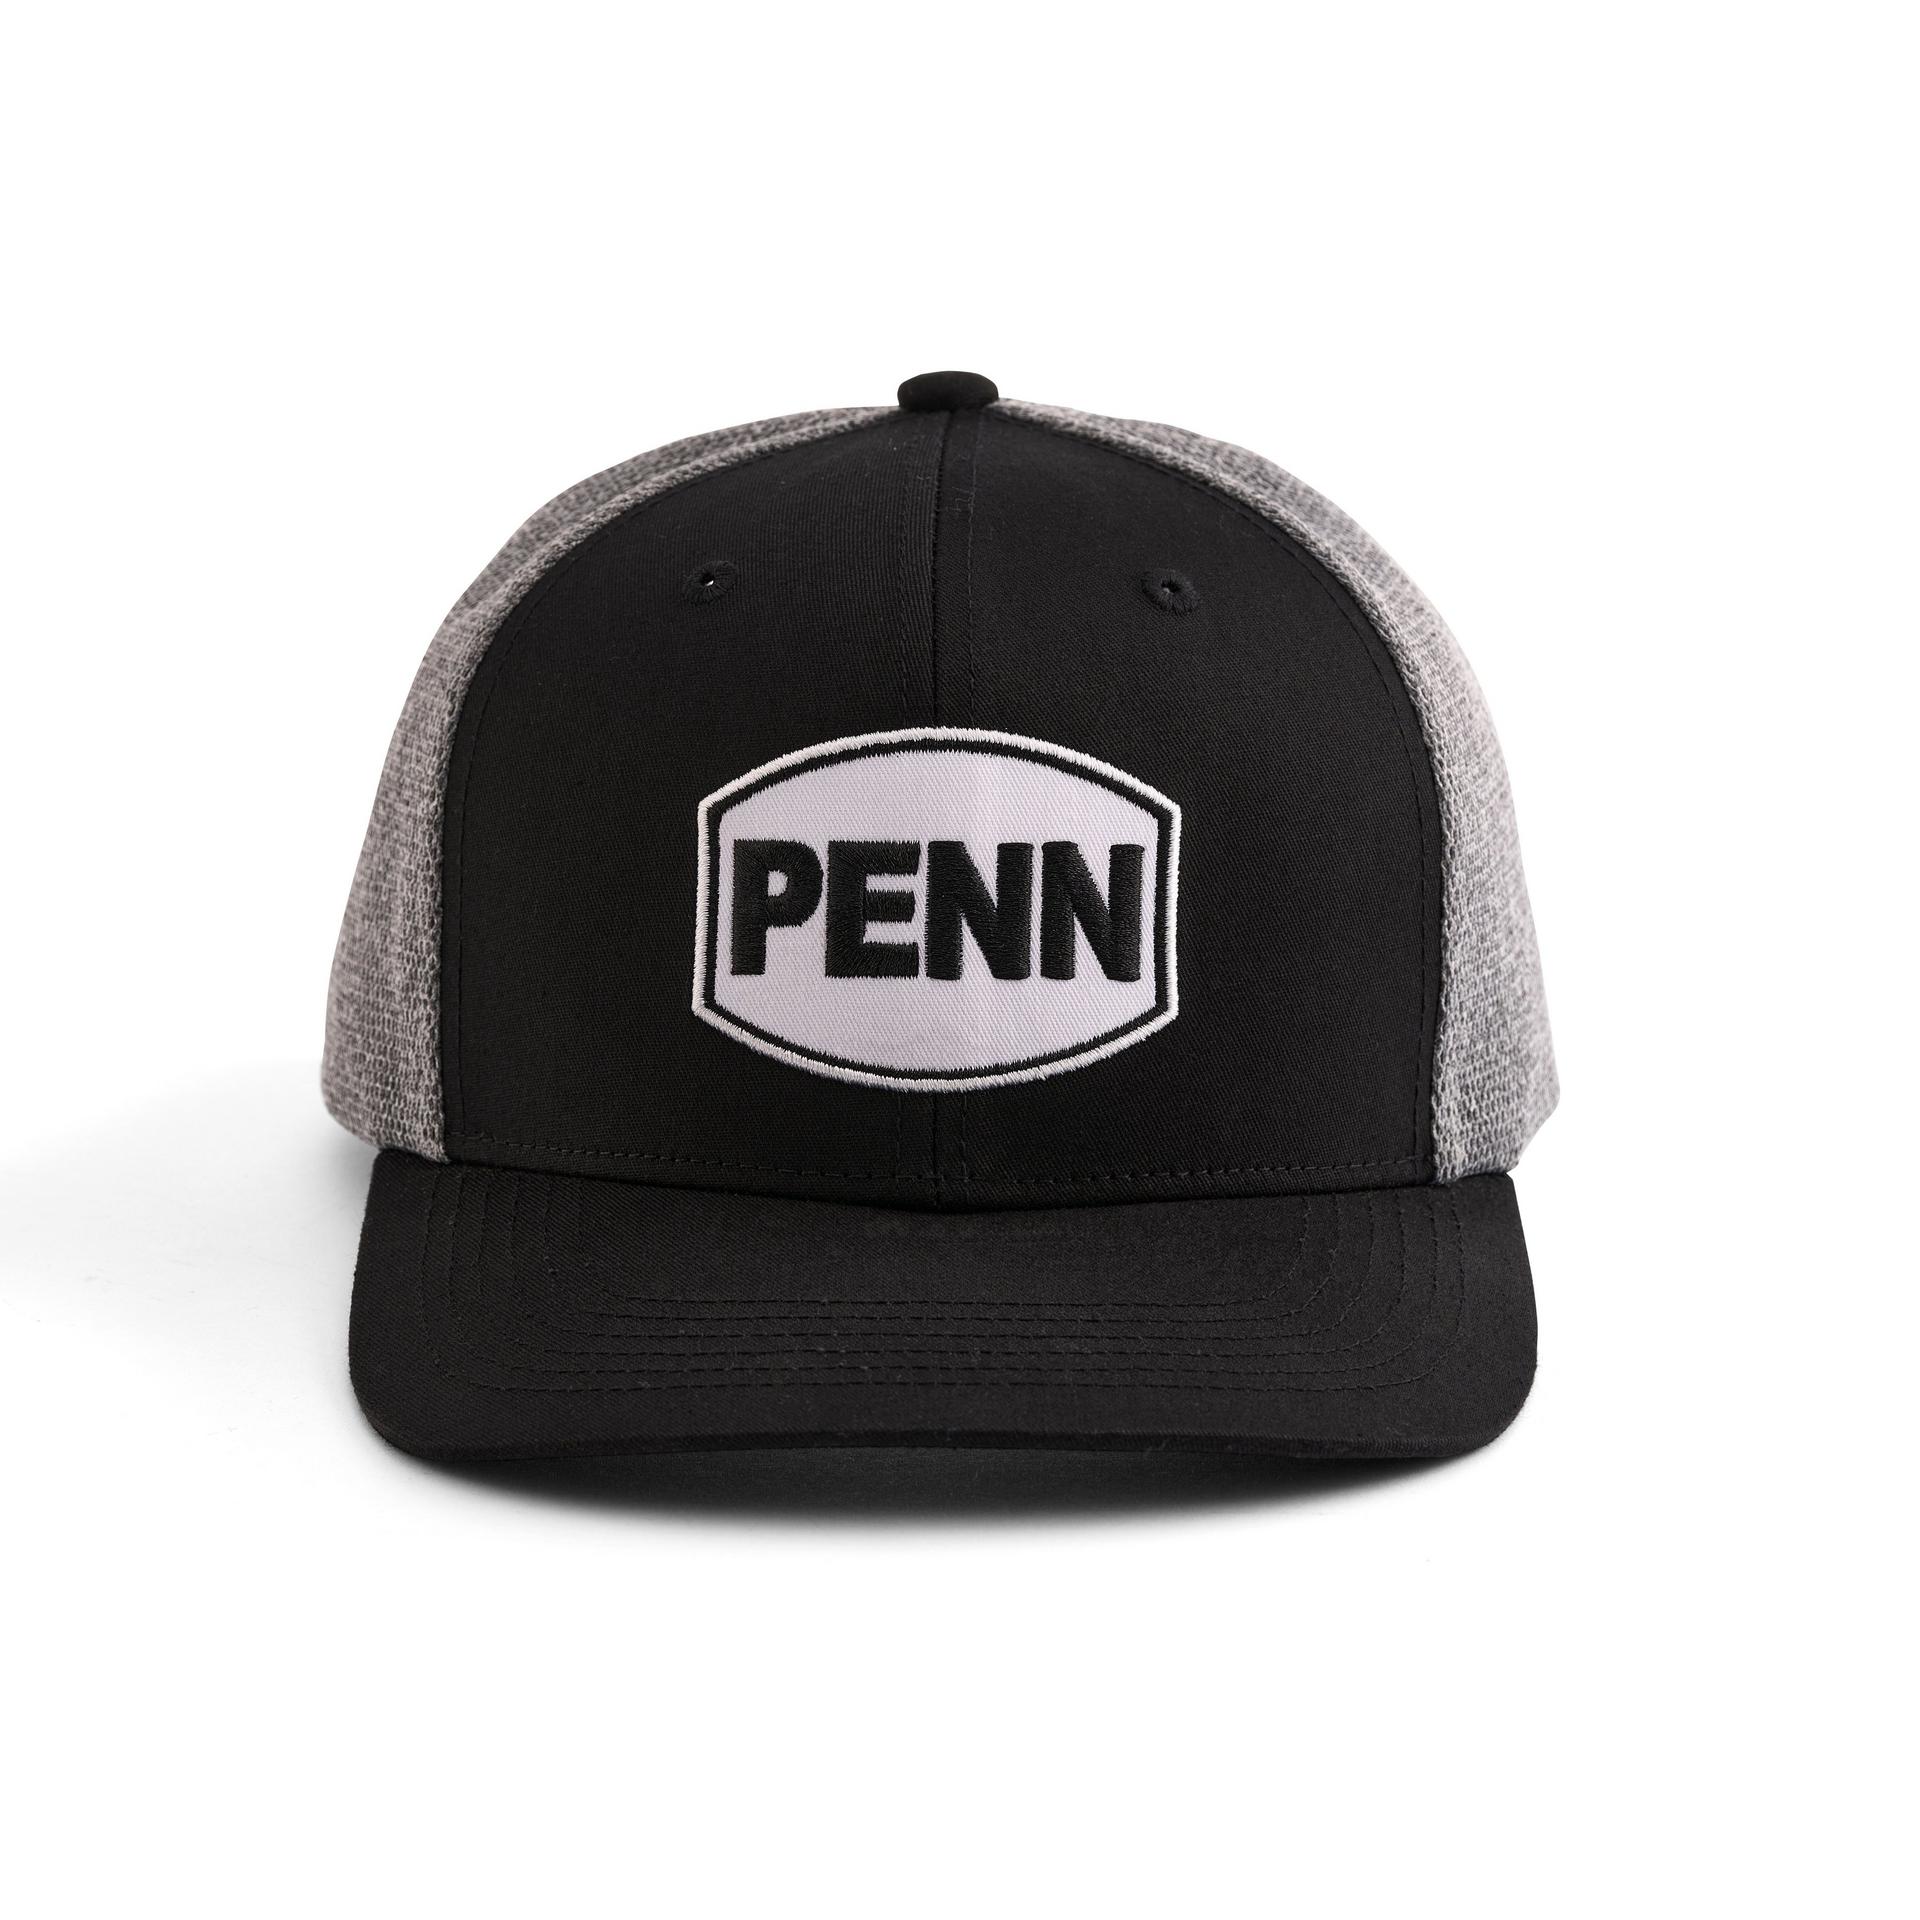 PENN® BlacktipH Limited Edition Snapback